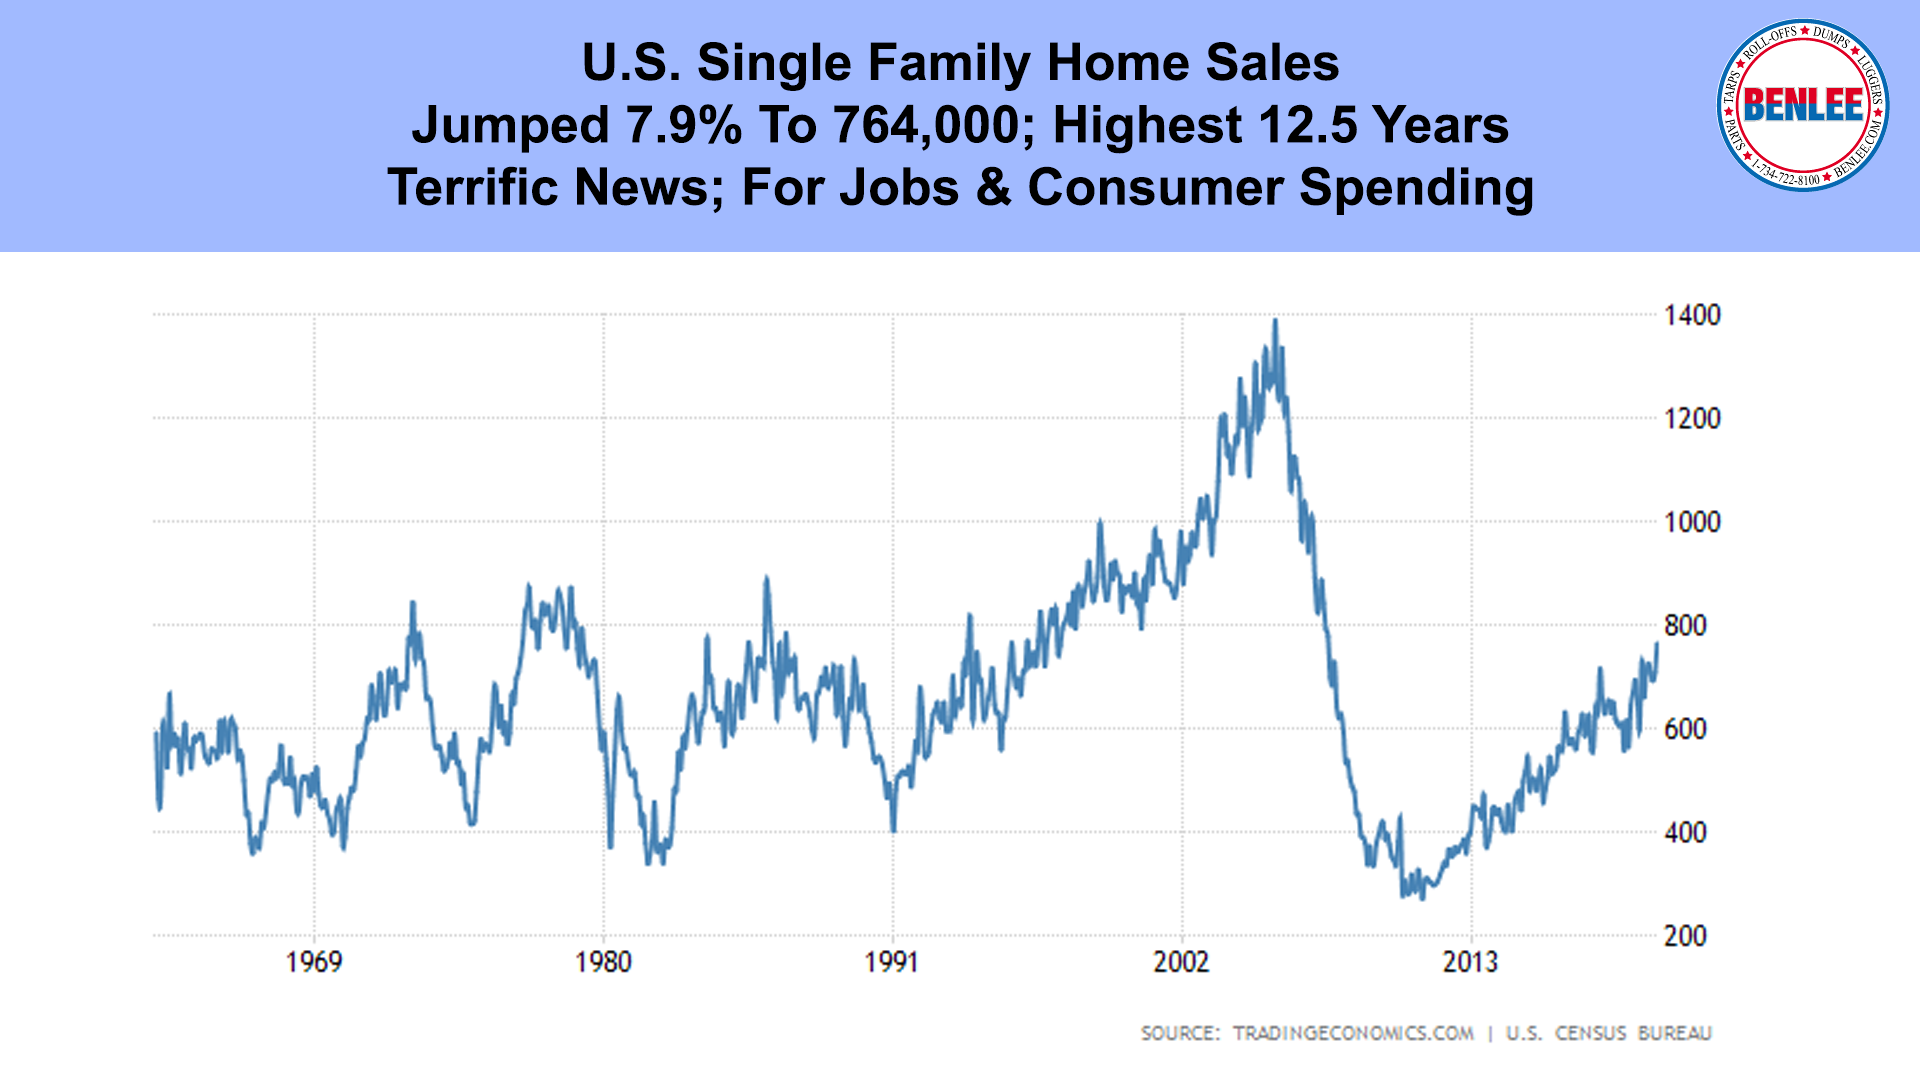 U.S. Single Family Home Sales